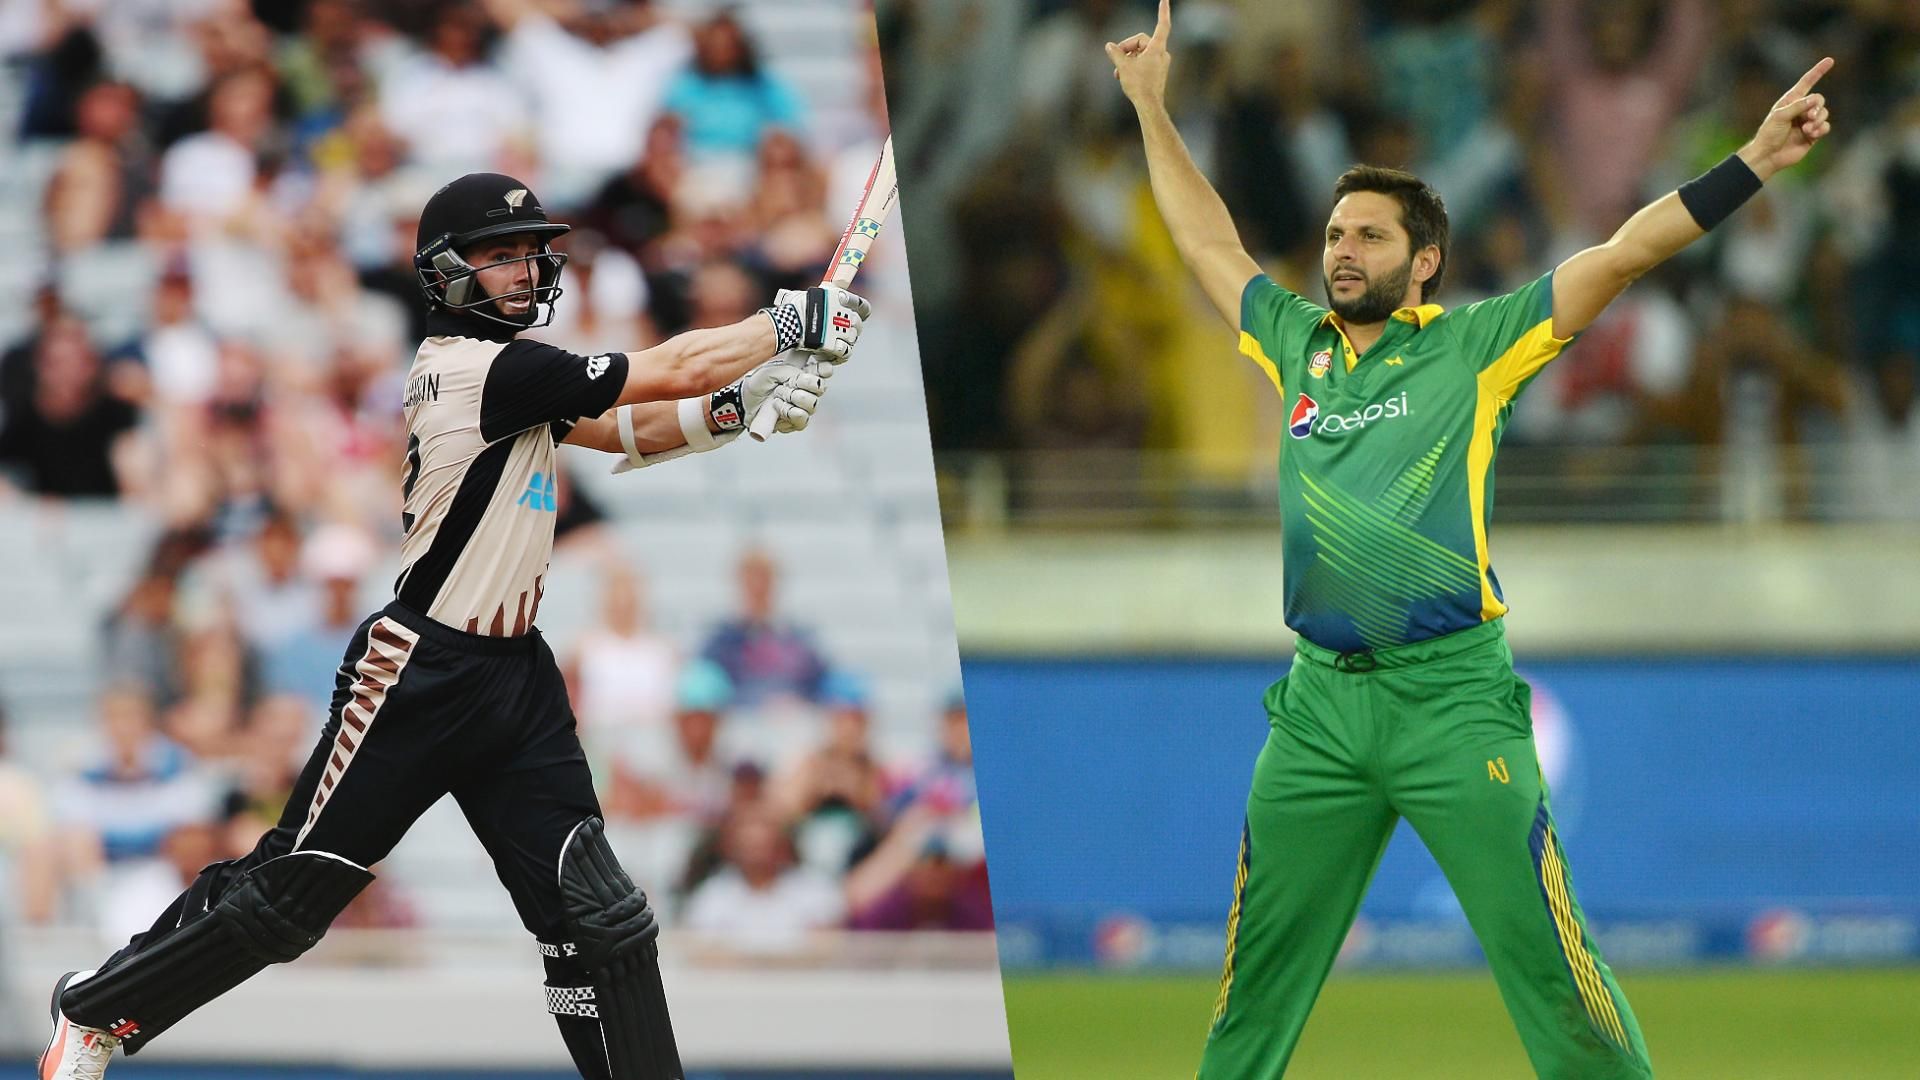 Pakistan vs New Zealand Live Cricket Score, 2nd Test Day 4: New Zealand reduce deficit to under 100 runs